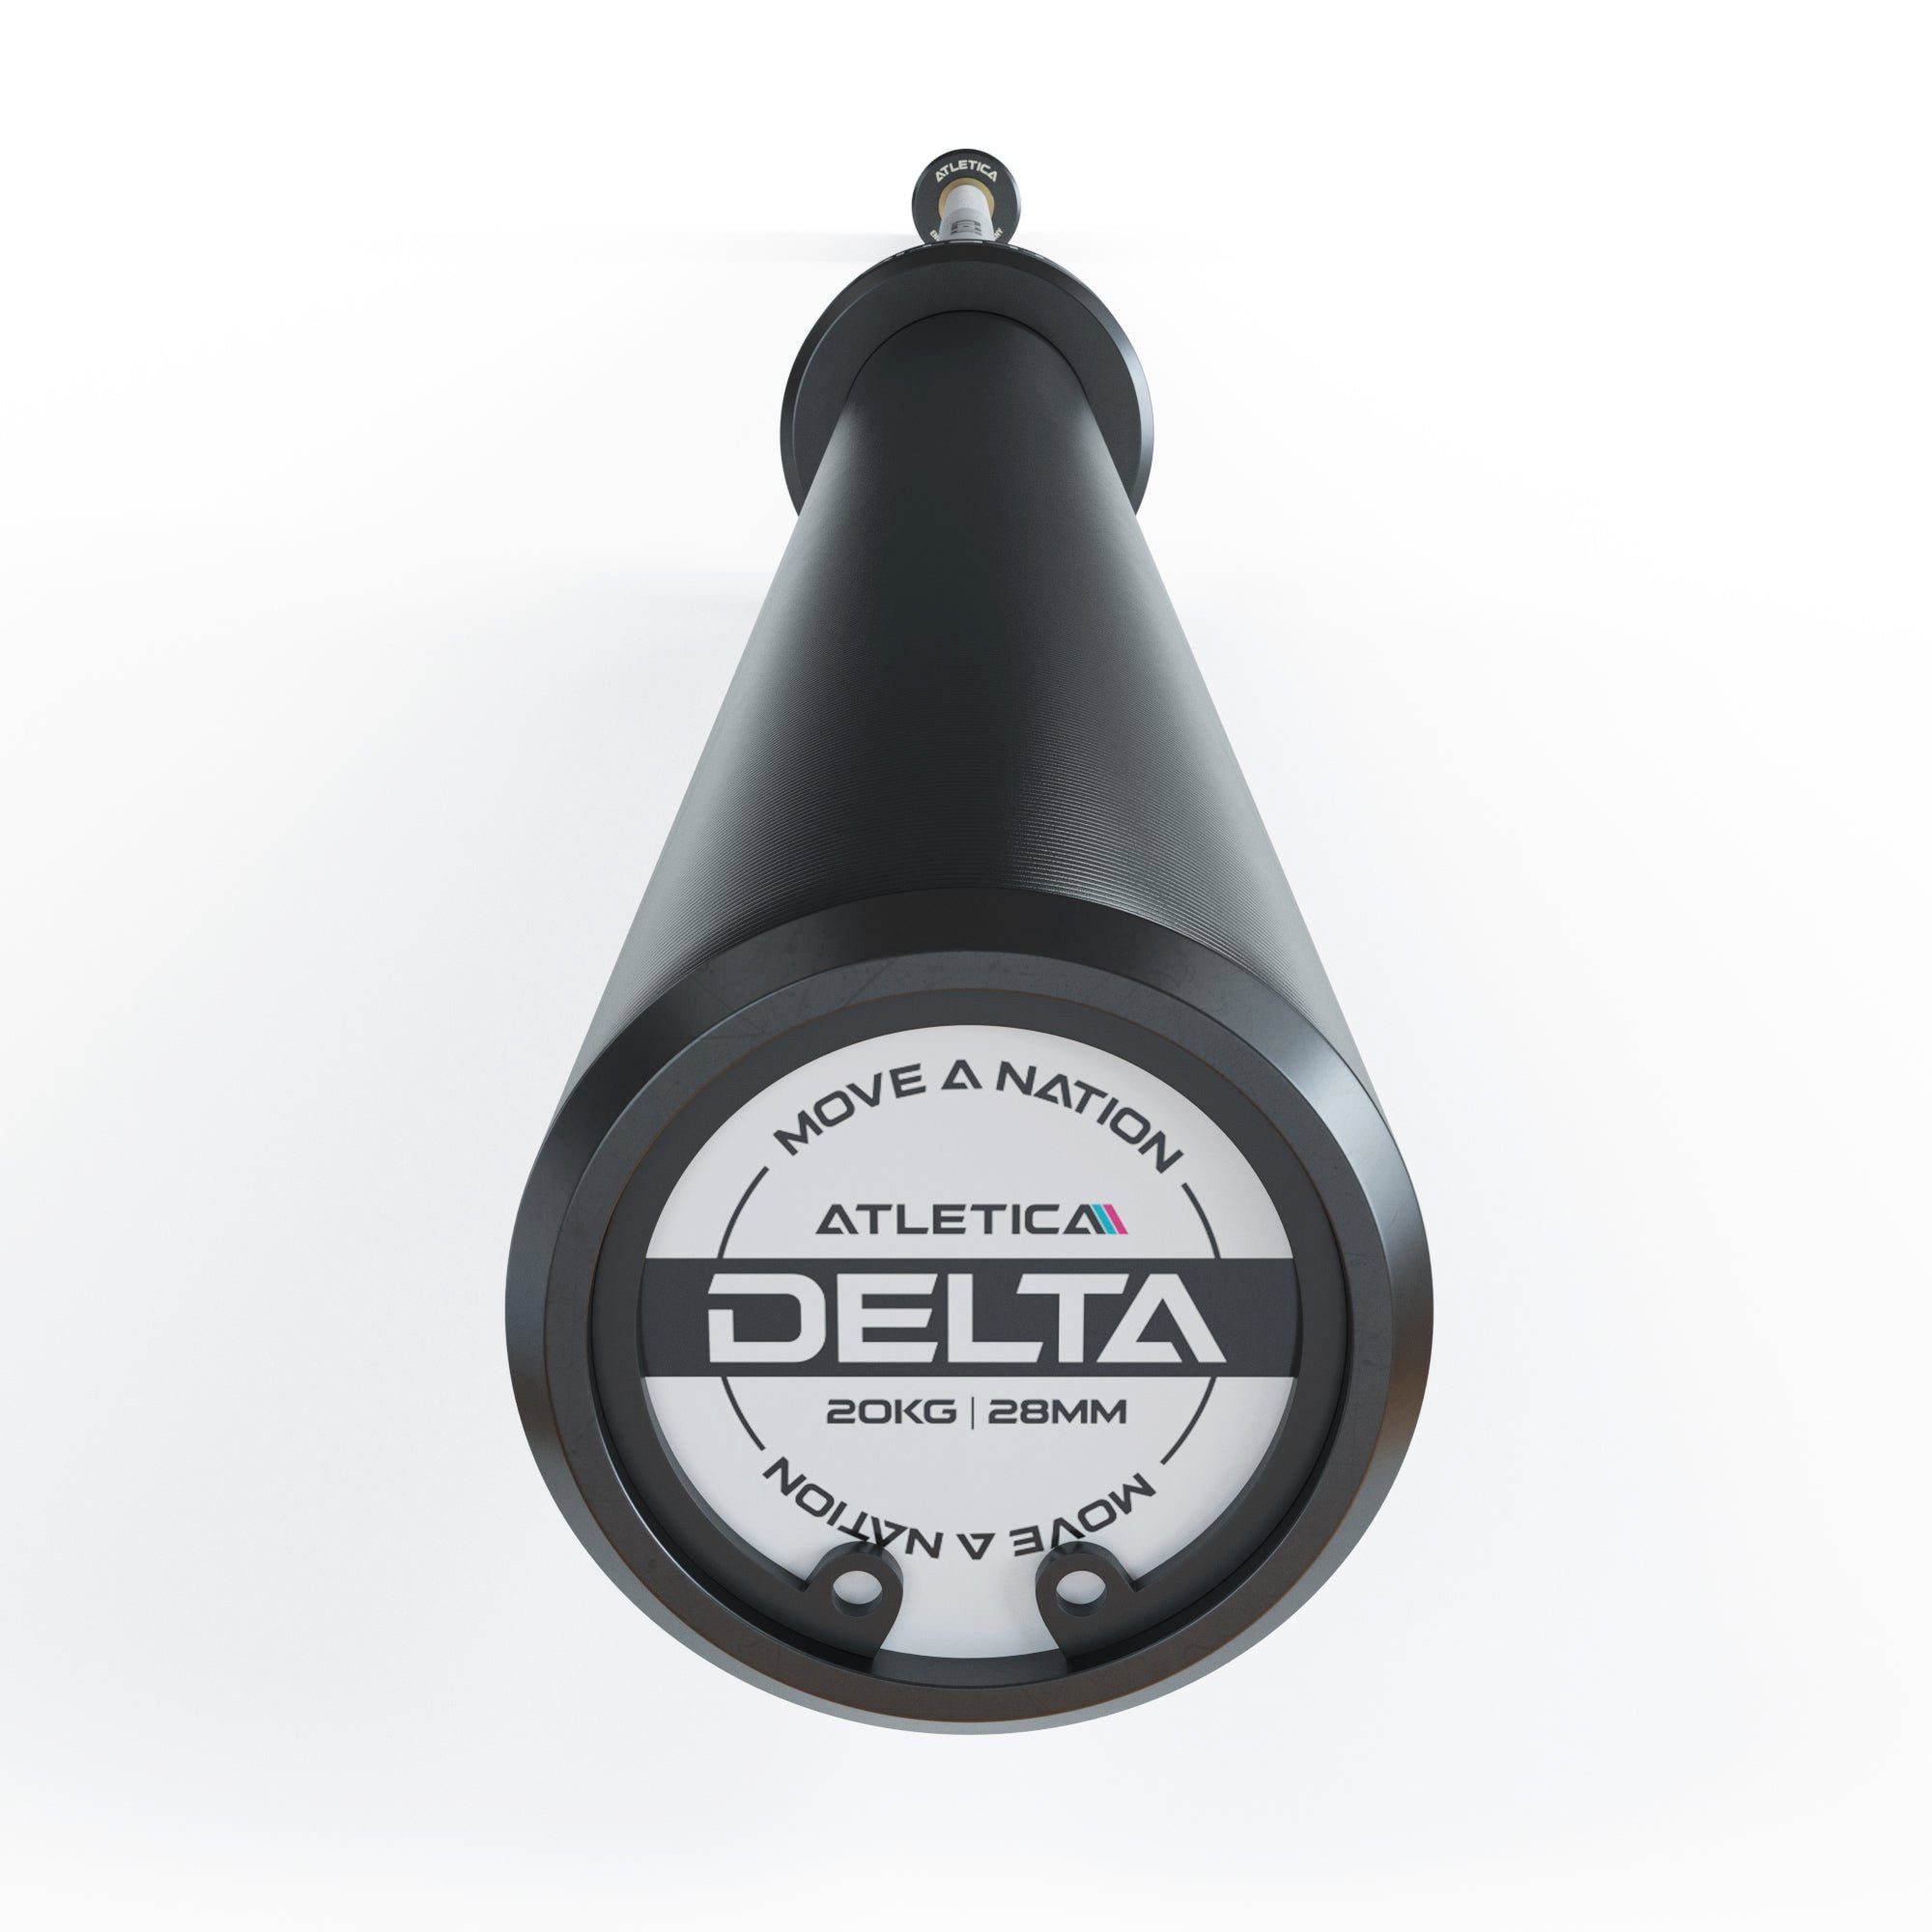 Delta IWF-Markierungen White, ATLETICA Langhantelstange 20kg, Hybrid-Langhantel & IPF-